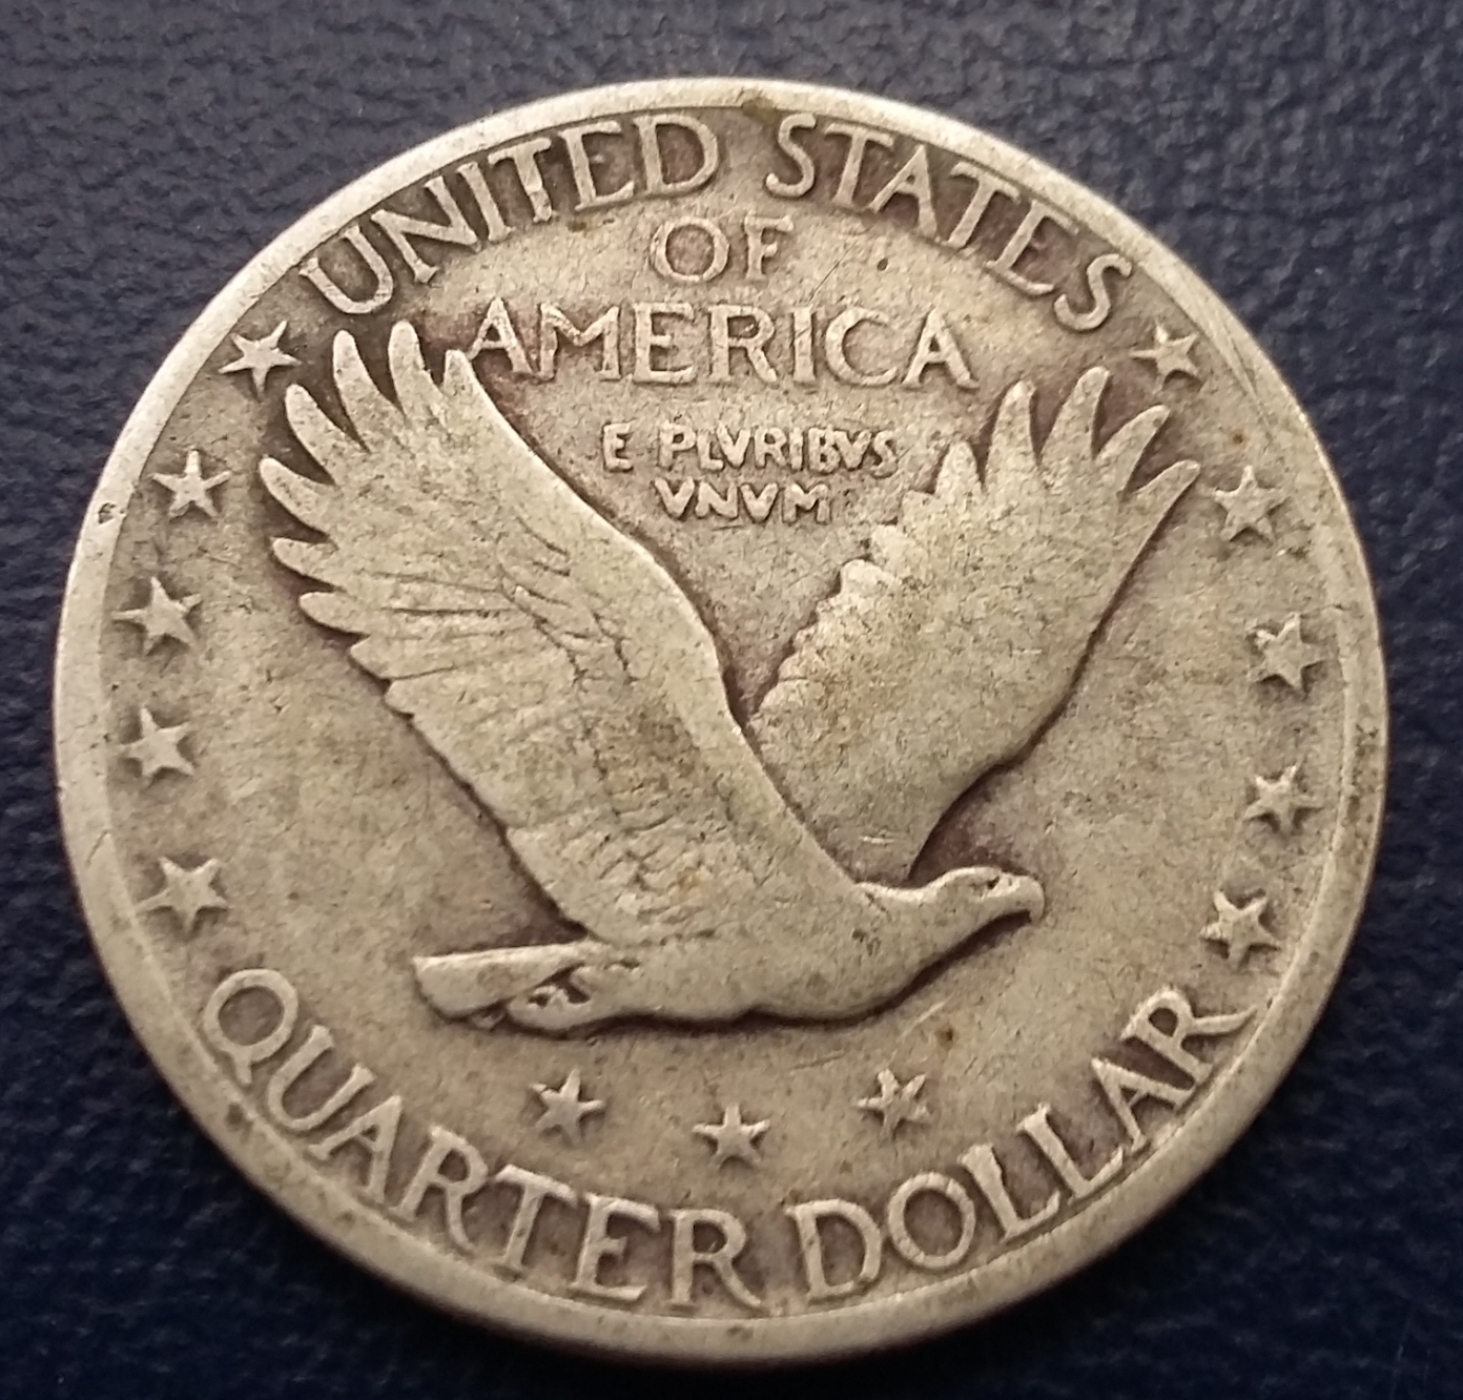 quarter-dollar-1929-quarter-standing-liberty-1916-1930-statele